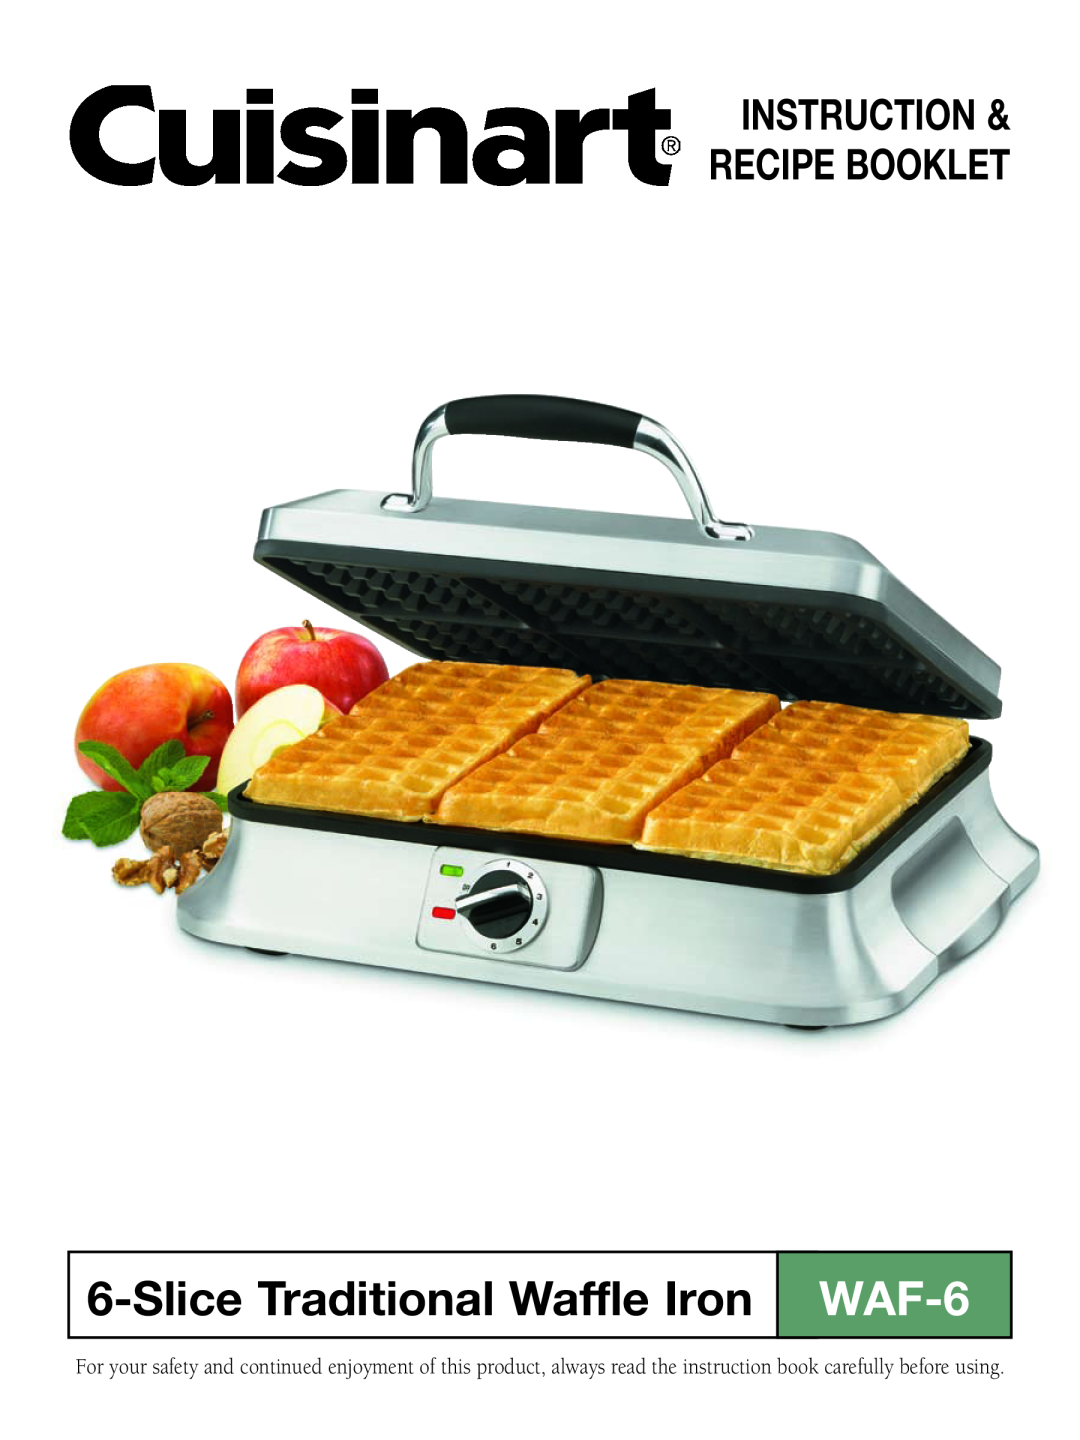 Cuisinart WAF-6 manual Instruction & Recipe Booklet, SliceTraditional Waffle Iron 